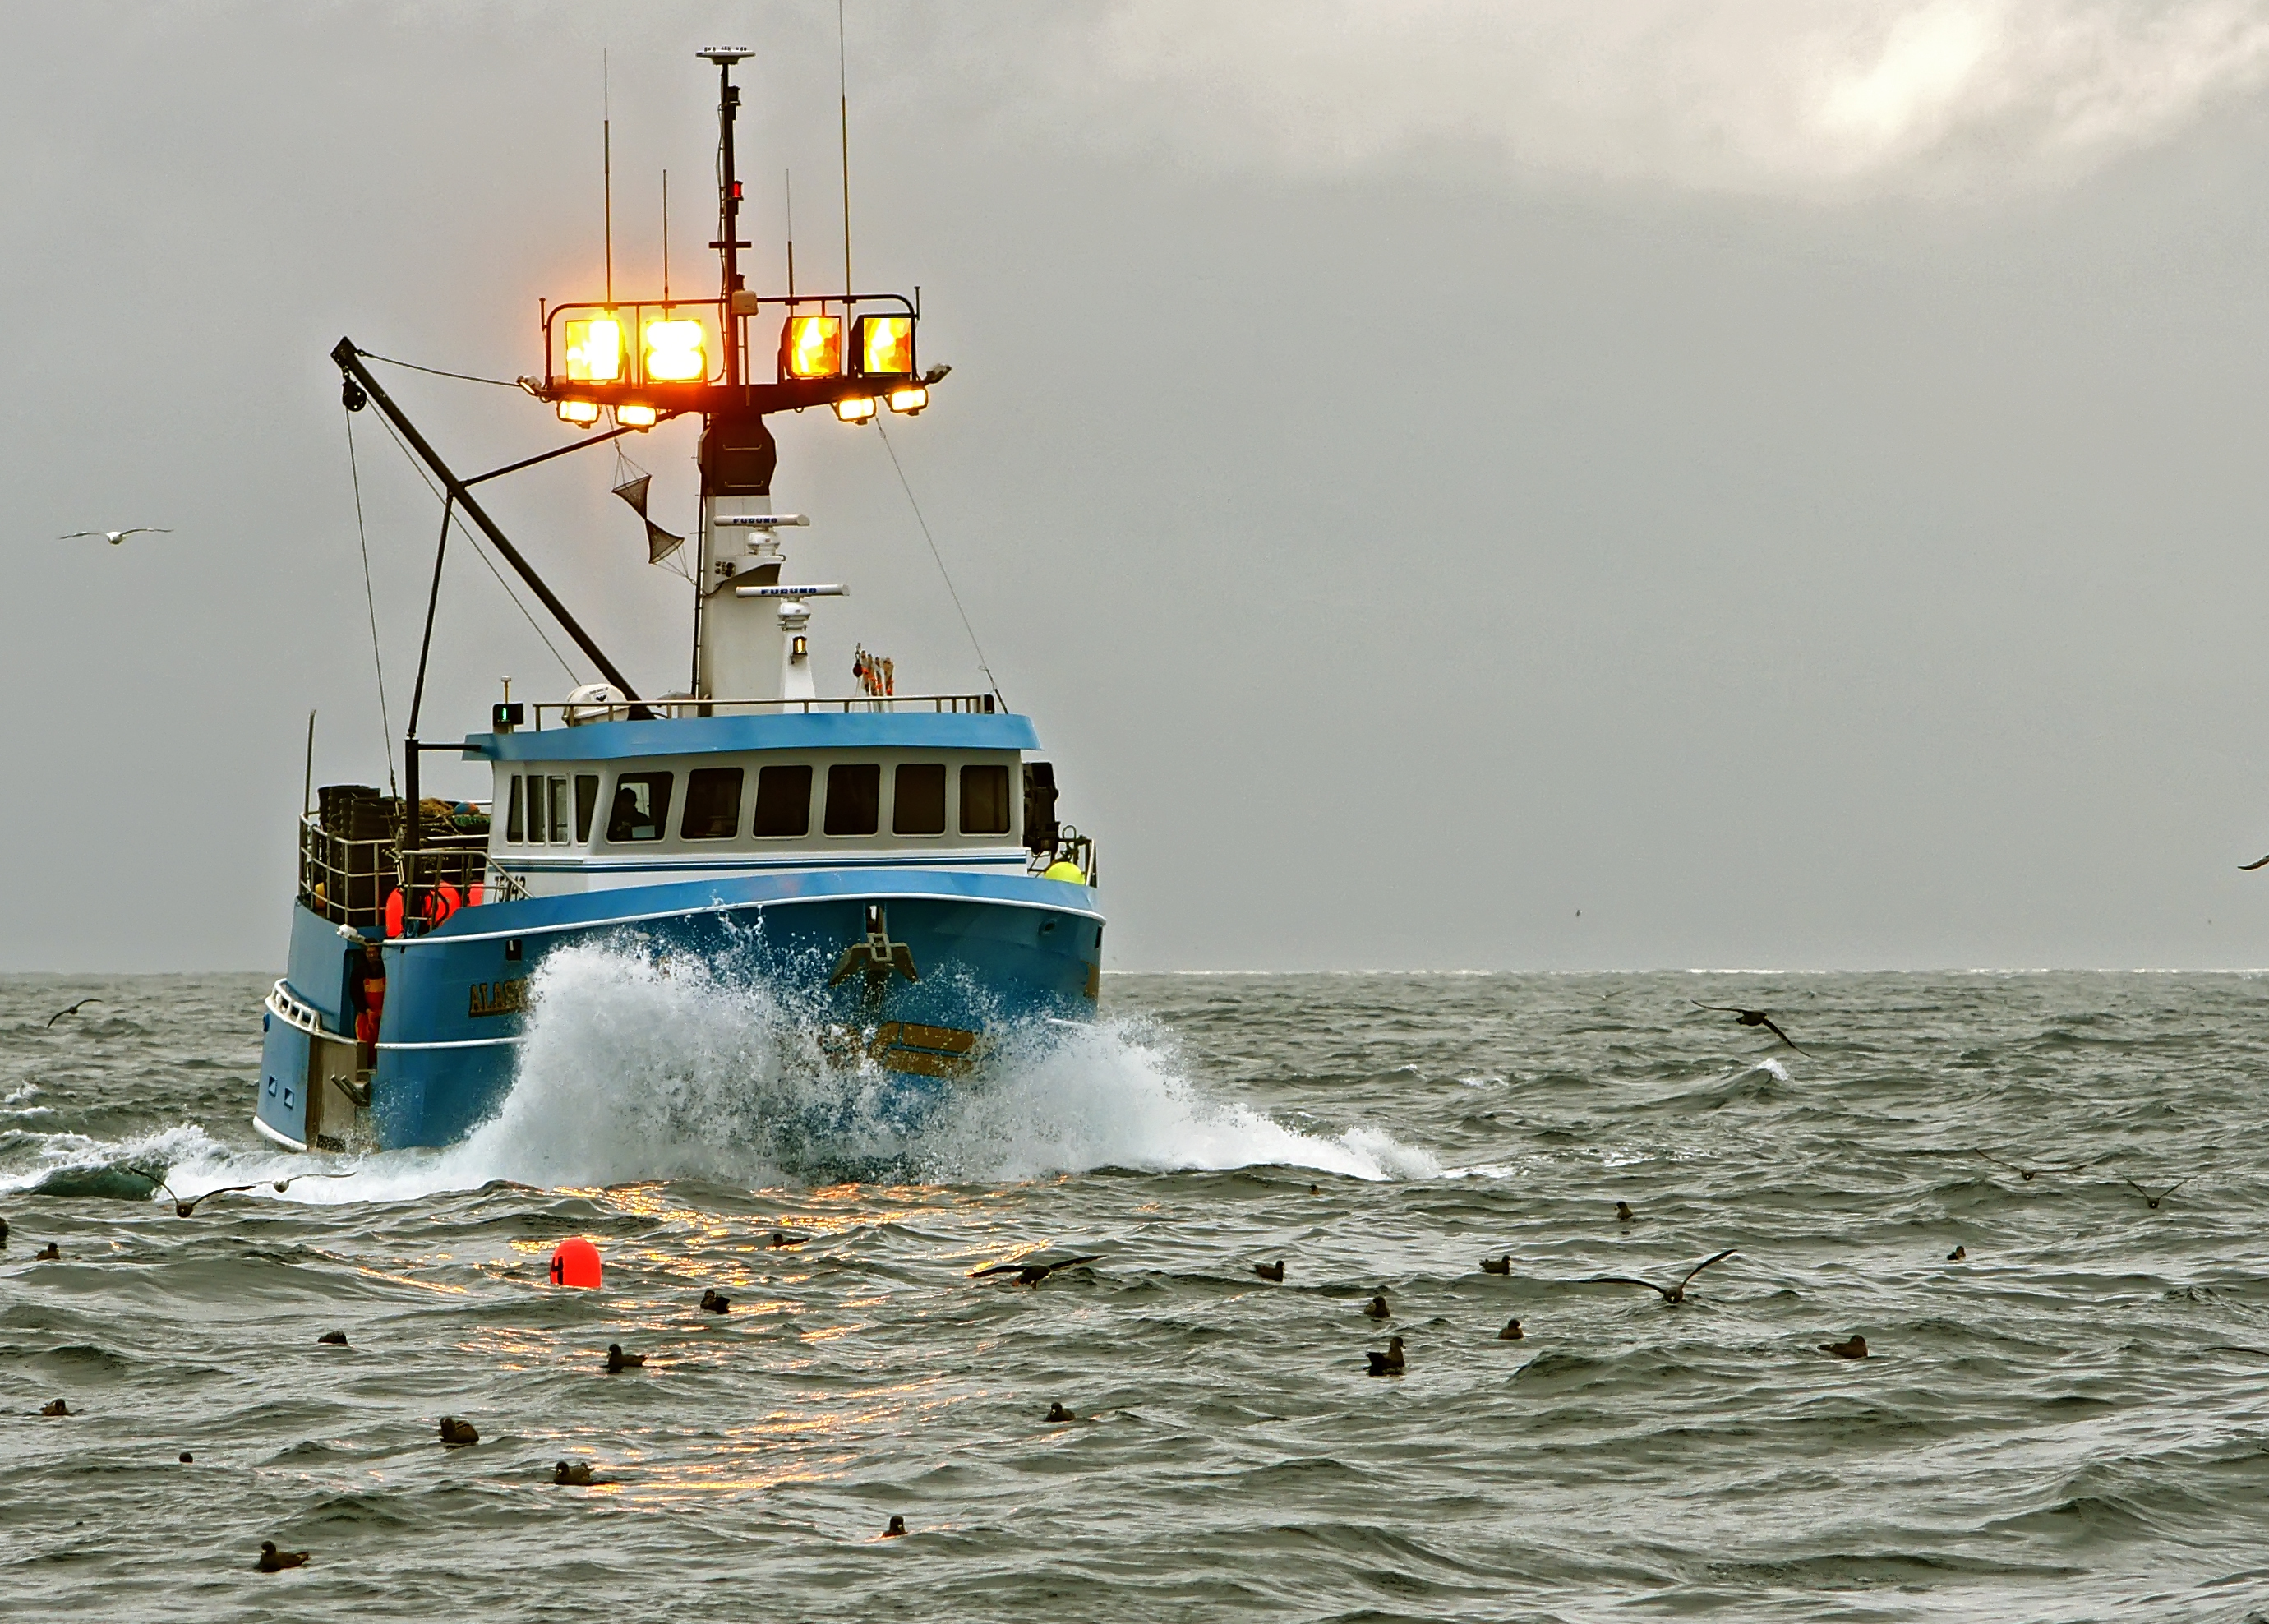 Barco de pesca. | Fuente: Shutterstock